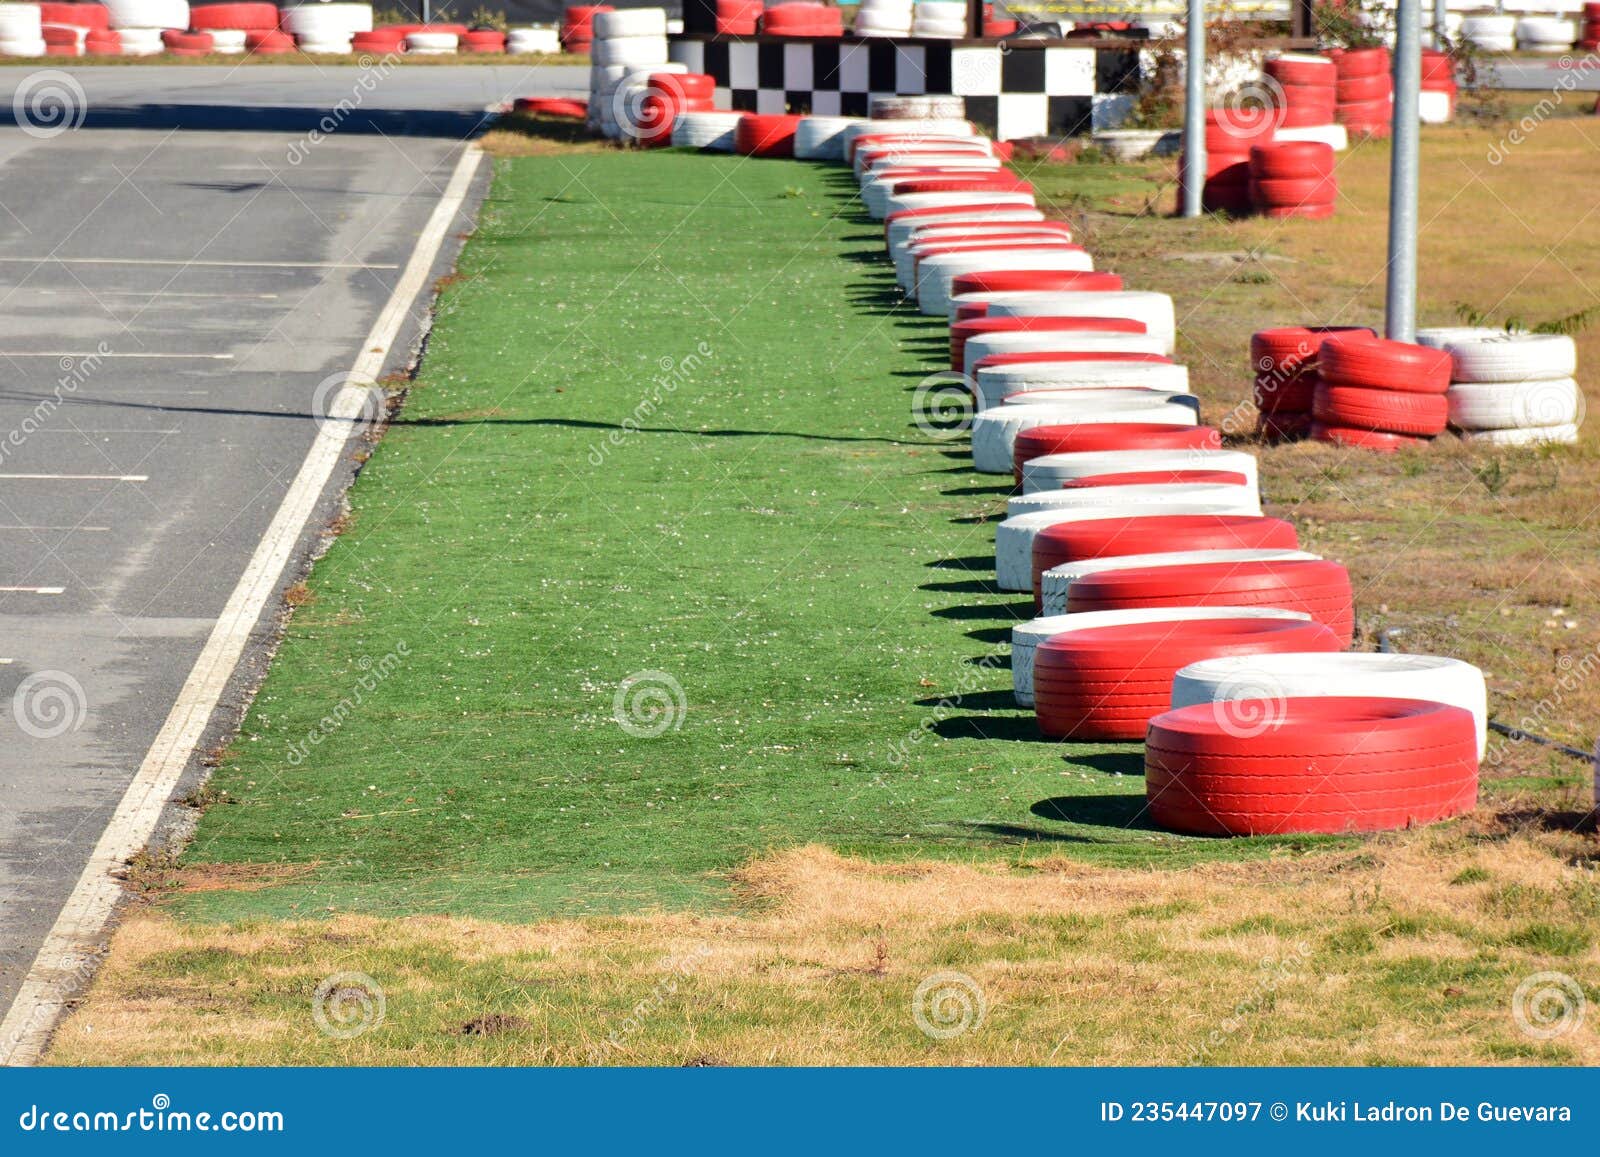 karting track